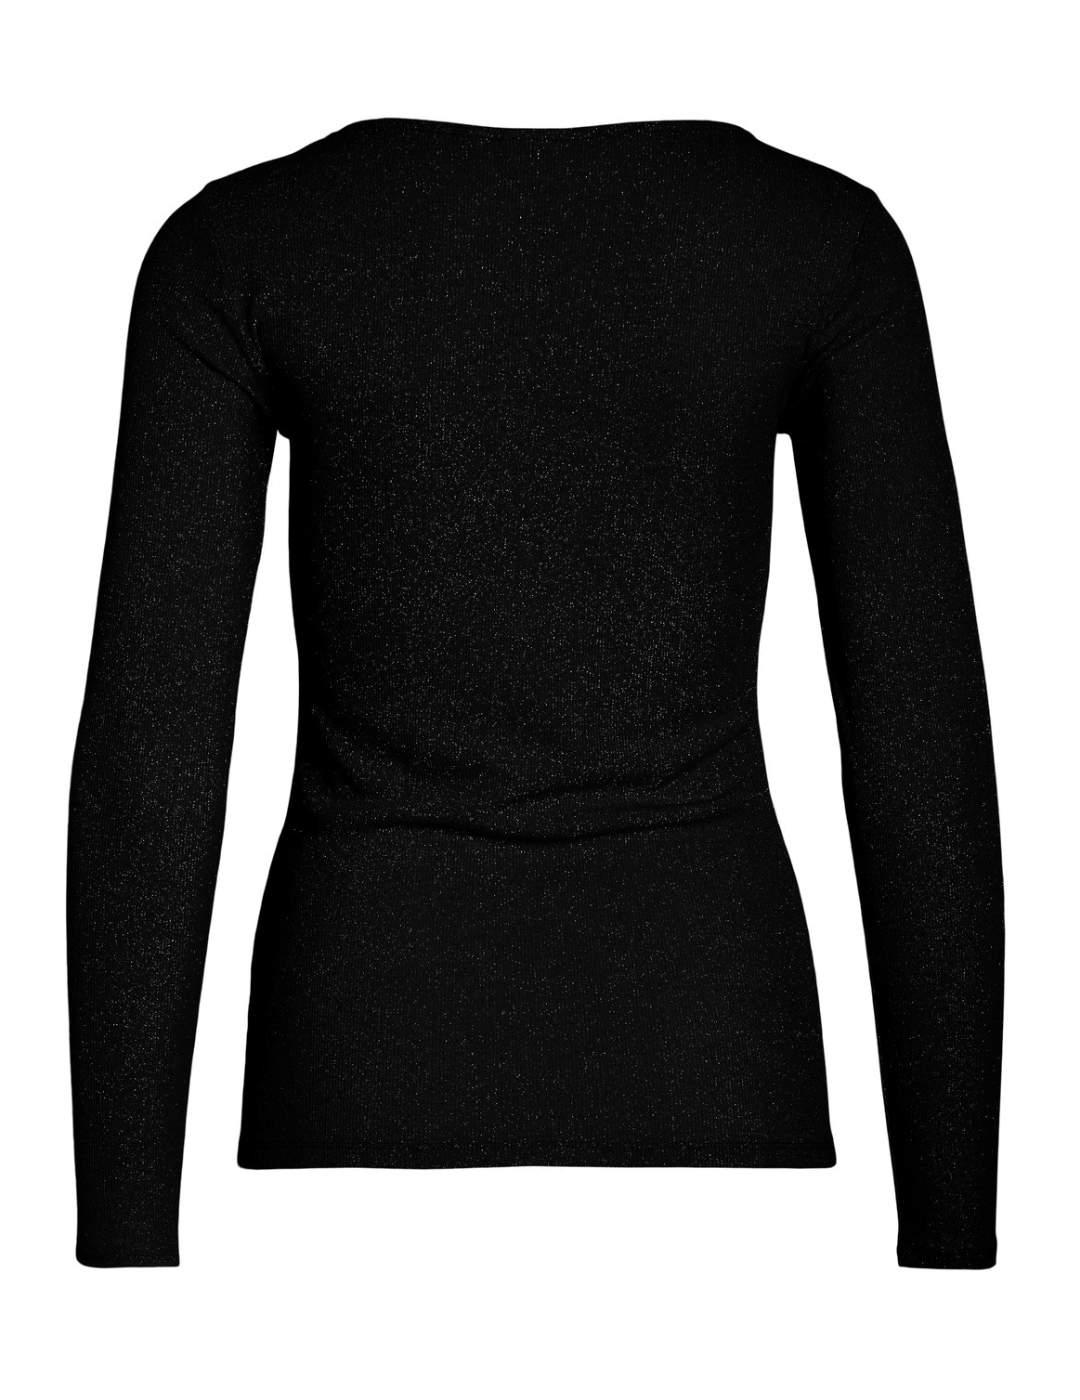 Camiseta Vila Luxy manga larga negra de mujer